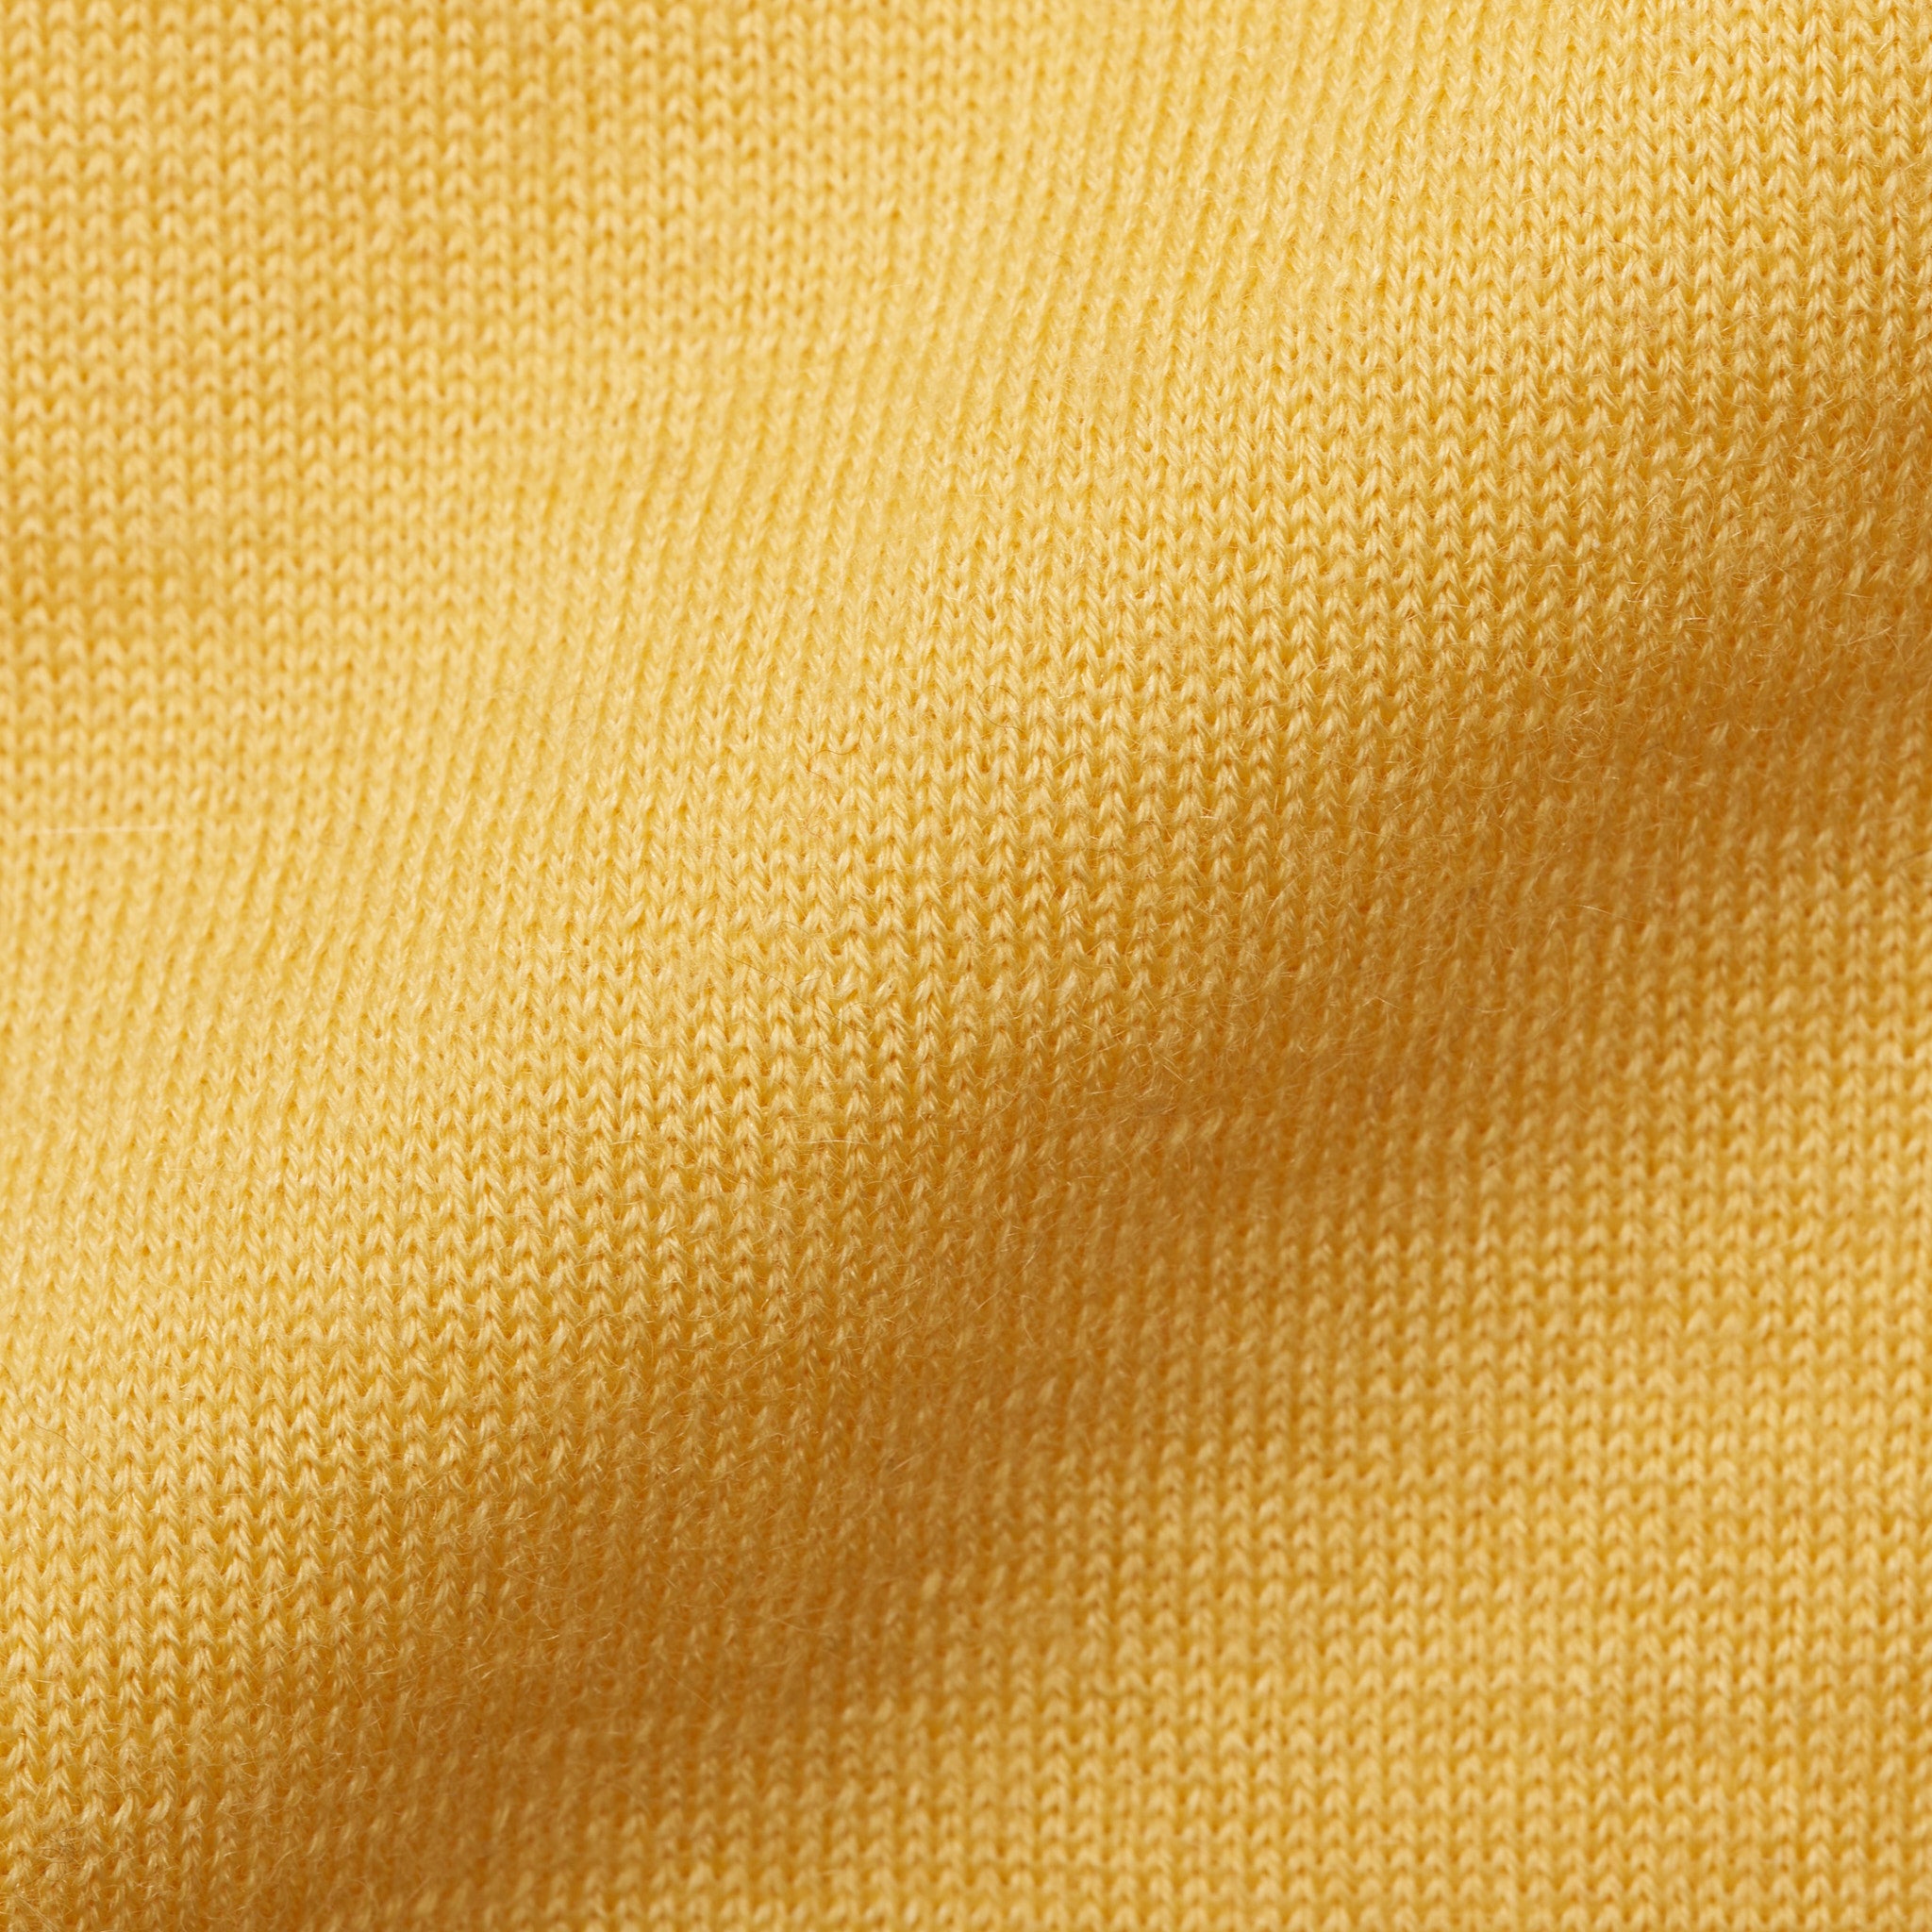 FEDELI Yellow Cashmere-Silk V-Neck Sleeveless Sweater EU 48 NEW US S FEDELI